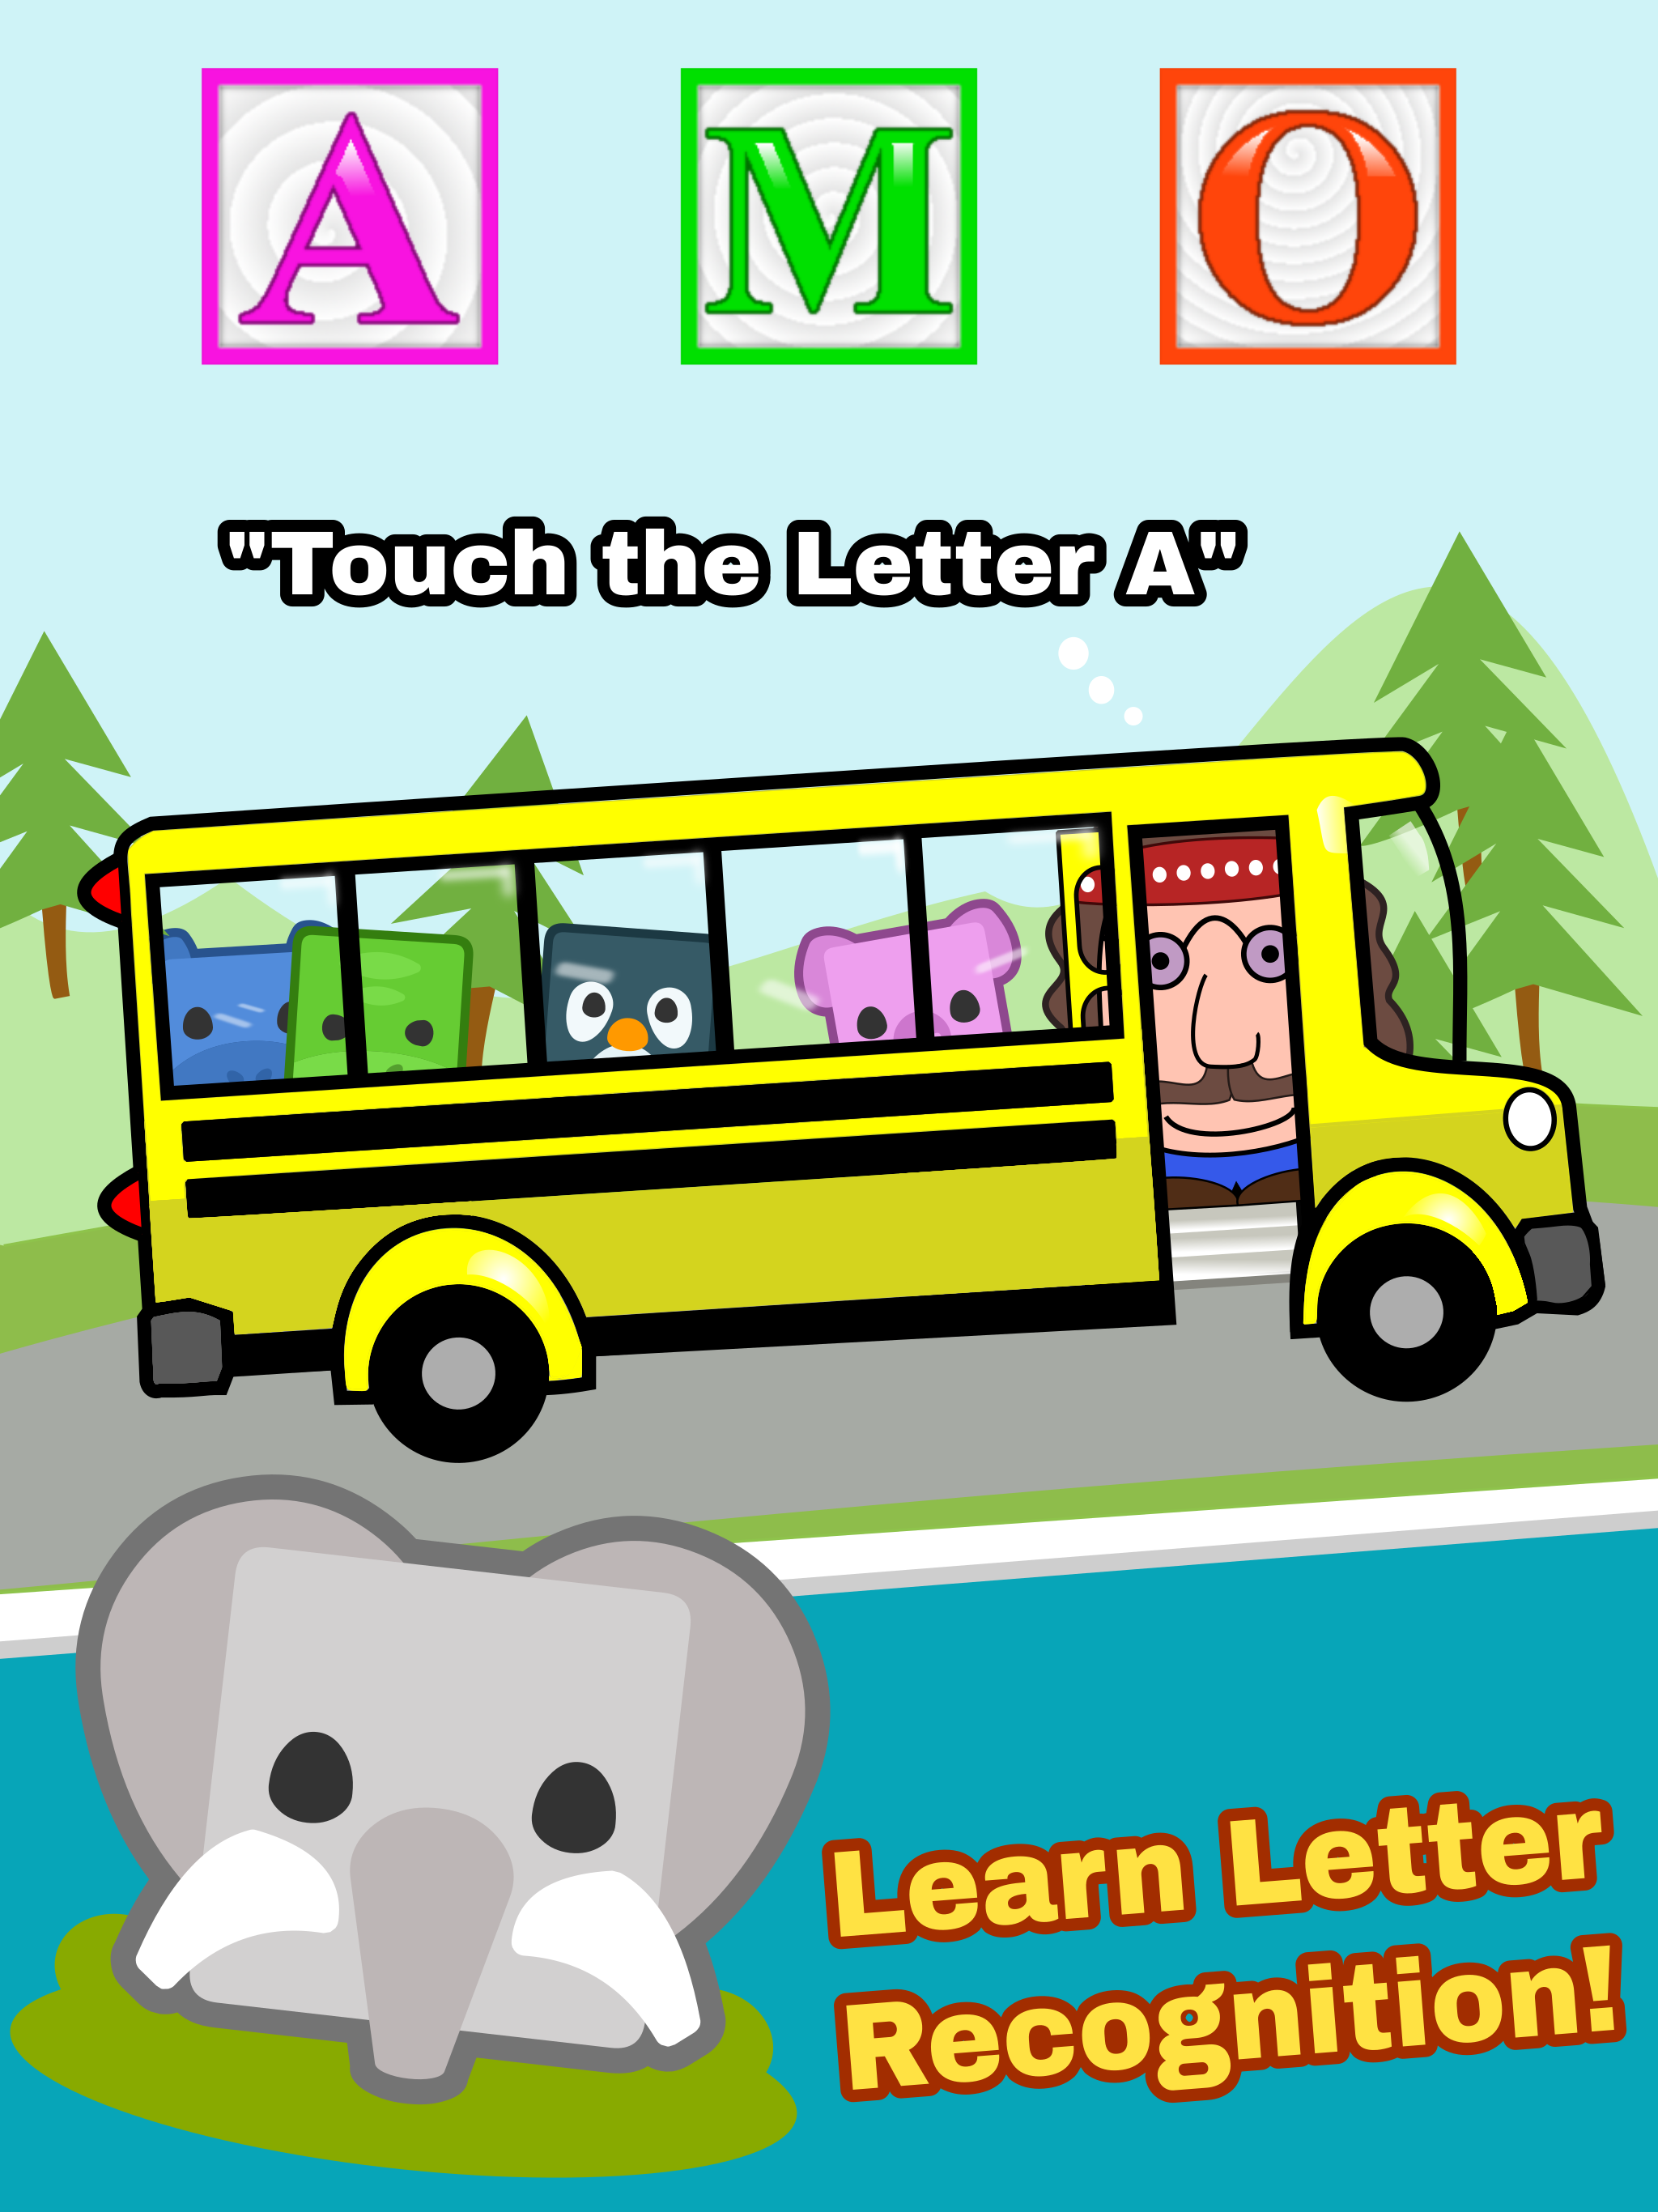 Preschool Bus Driver Screenshot